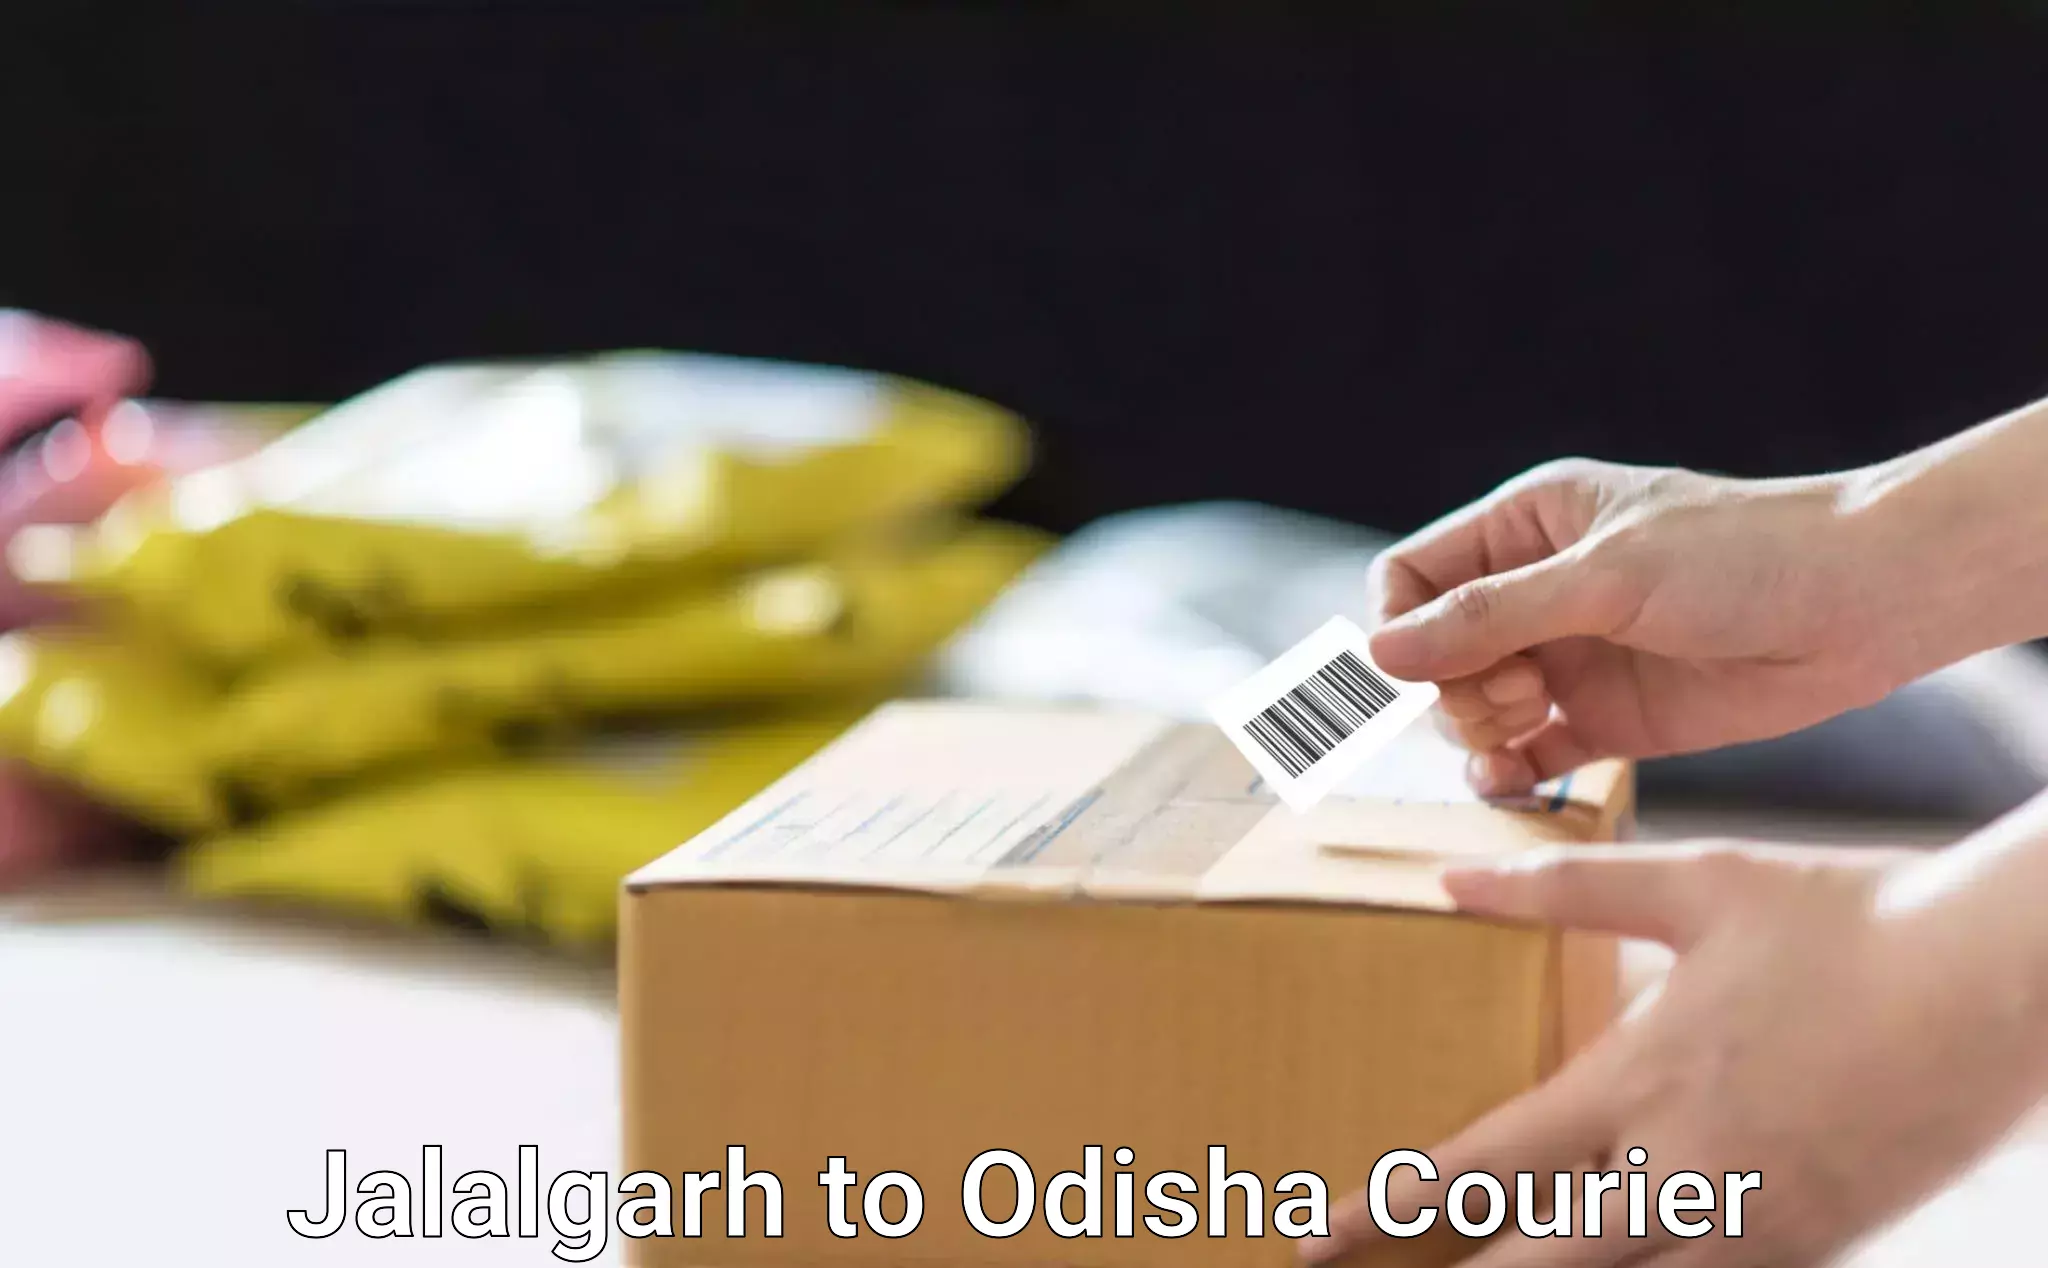 Furniture delivery service Jalalgarh to Odisha